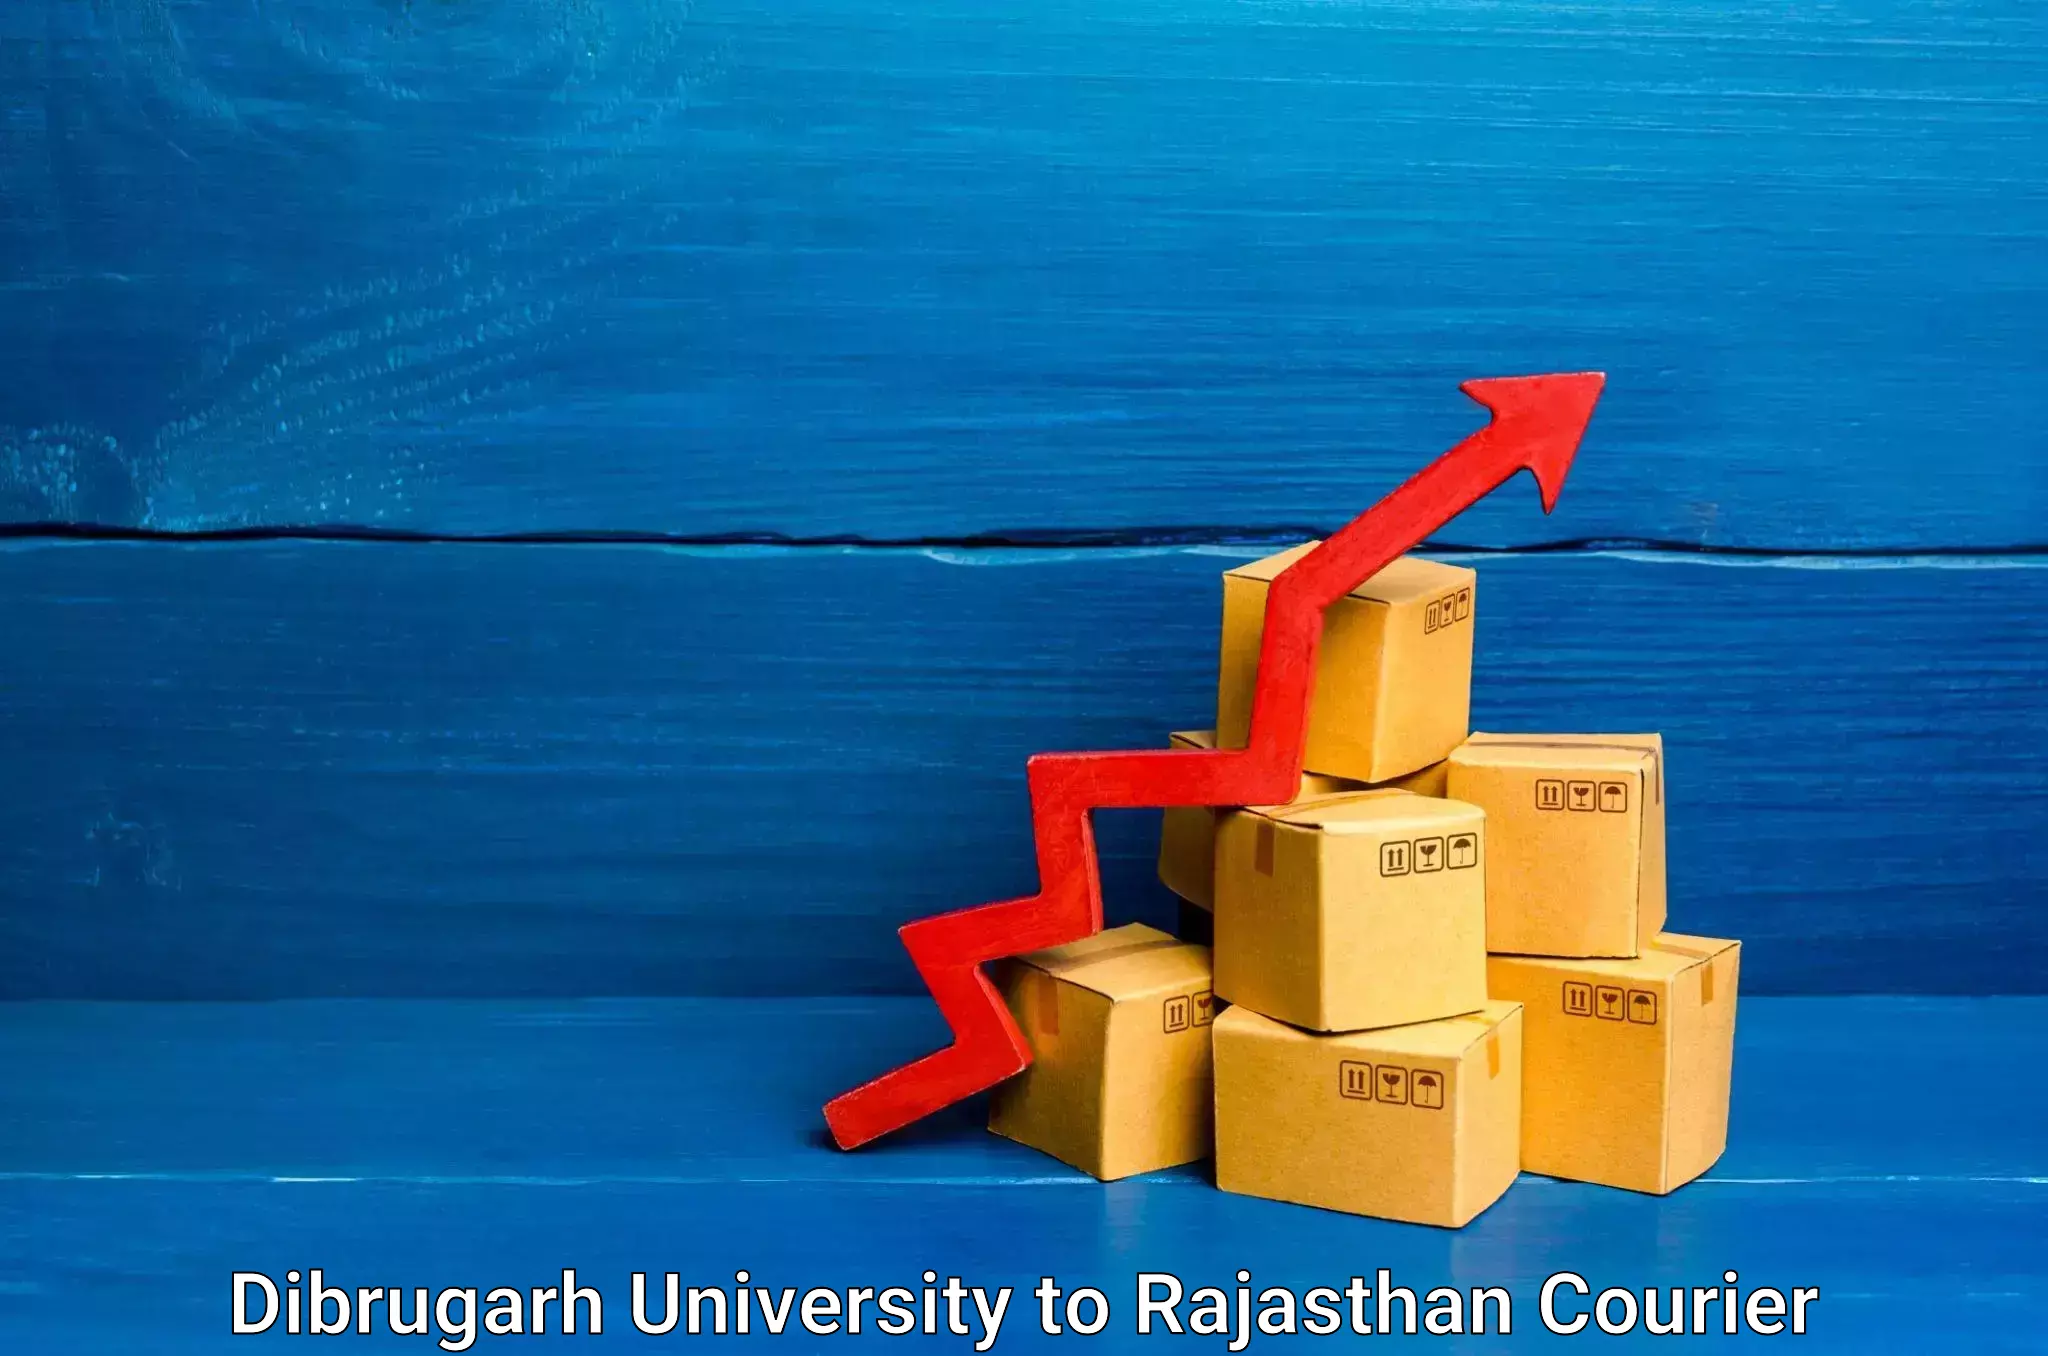 Courier service comparison Dibrugarh University to Sambhar